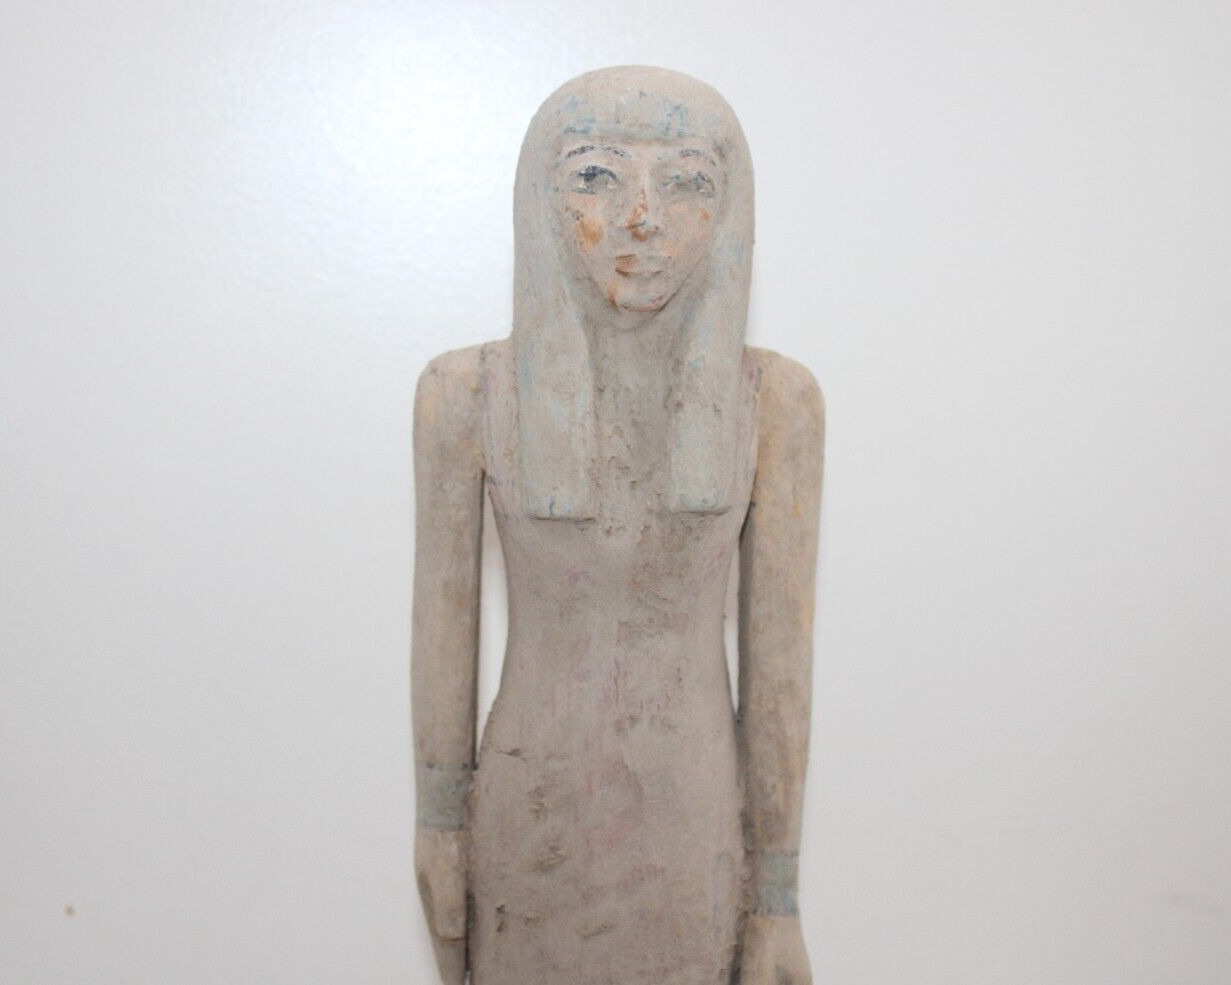 RARE ANCIENT EGYPTIAN ANTIQUE QUEEN Nefertari Wood Pharaoh Protect Statue